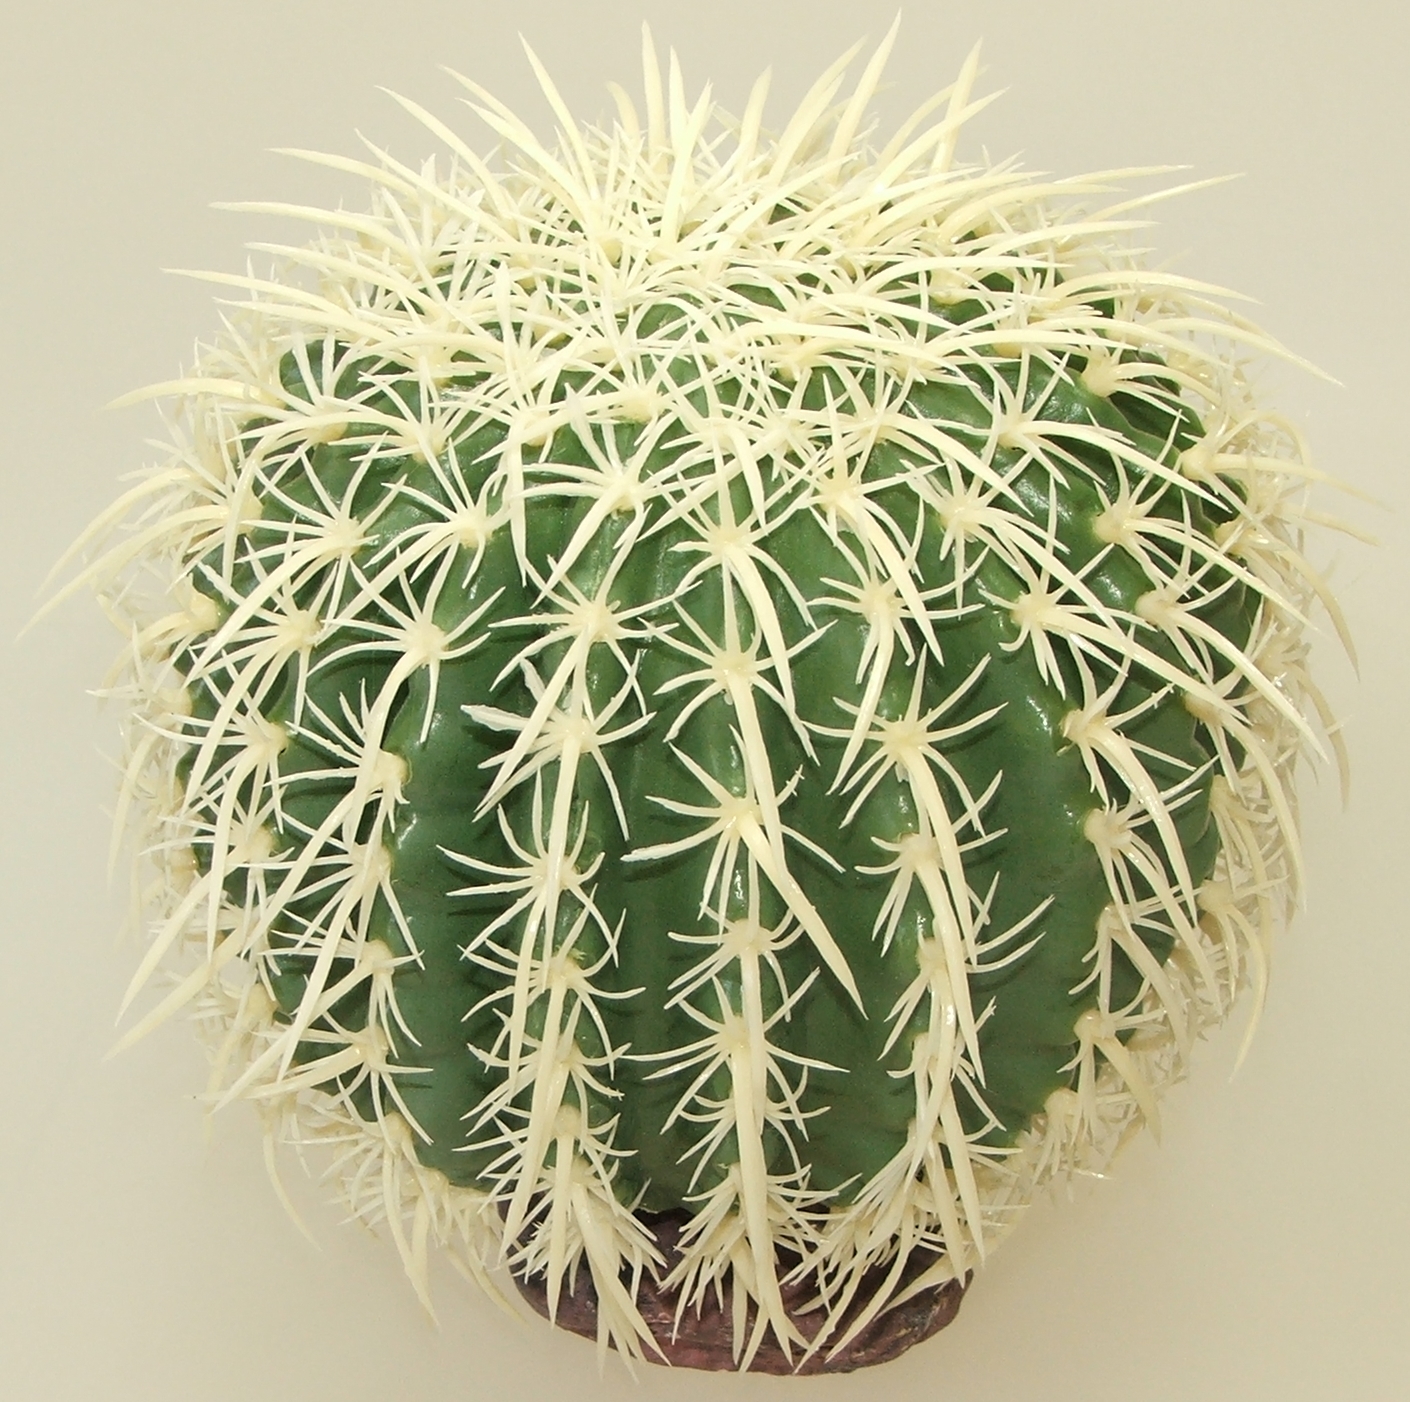 Kaktus Sierra Nevada 16 cm hoch